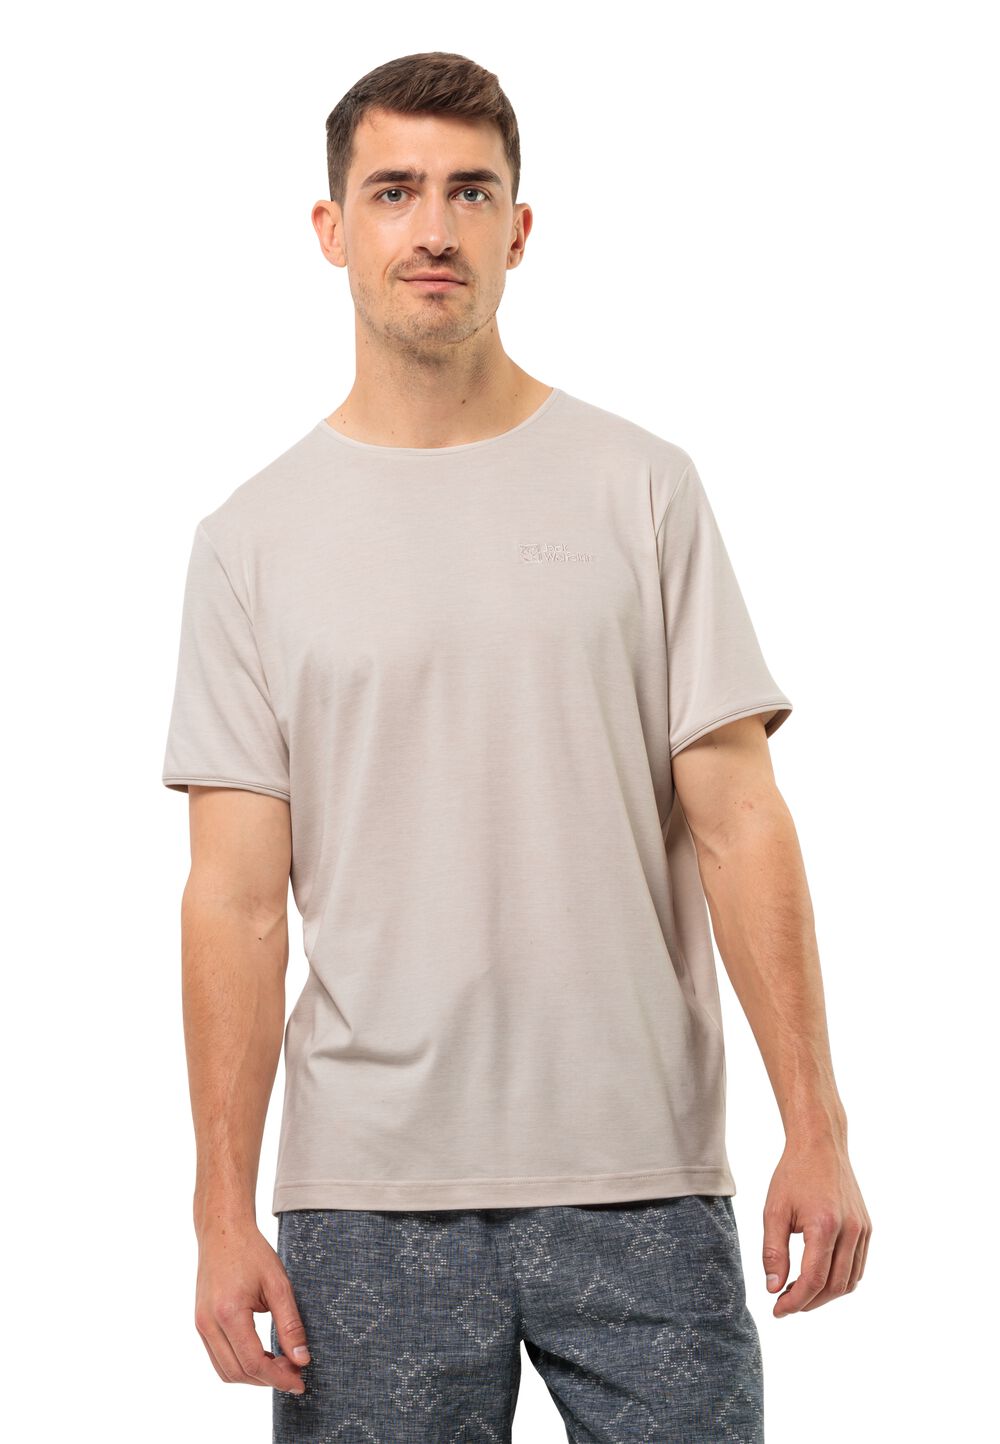 Jack Wolfskin Travel T-Shirt Men Functioneel shirt Heren S sea shell sea shell